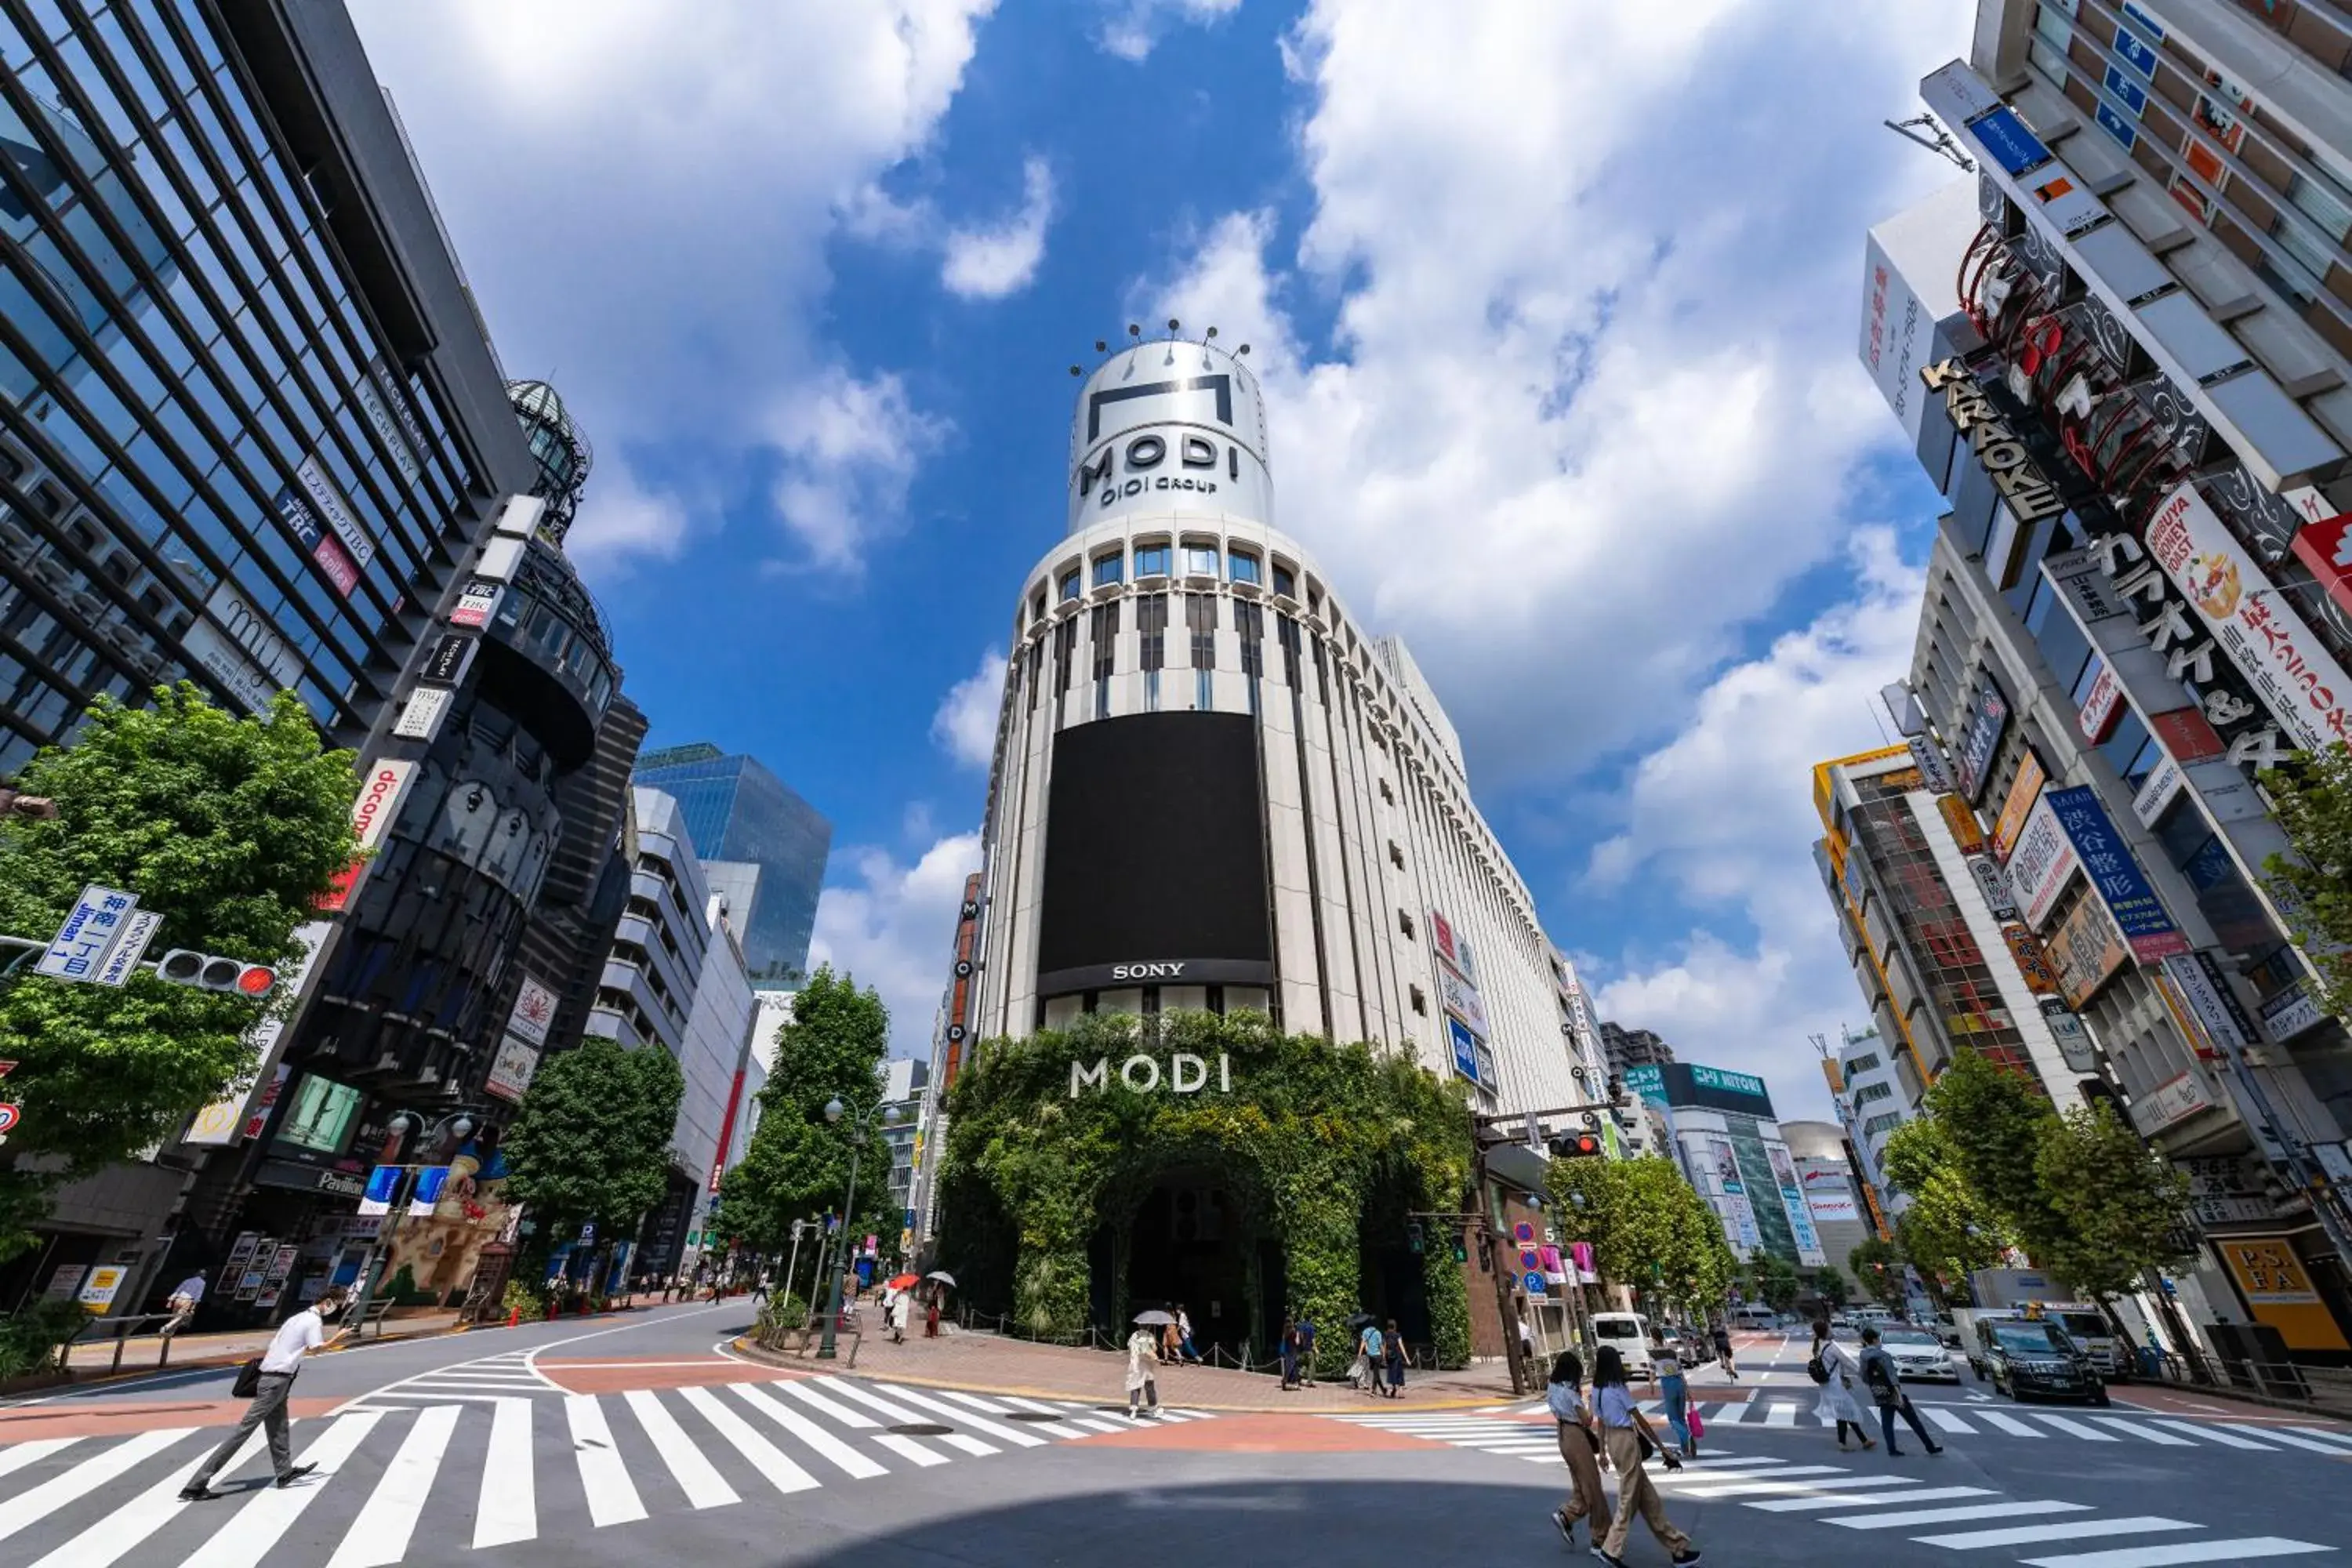 Nearby landmark in The OneFive Tokyo Shibuya